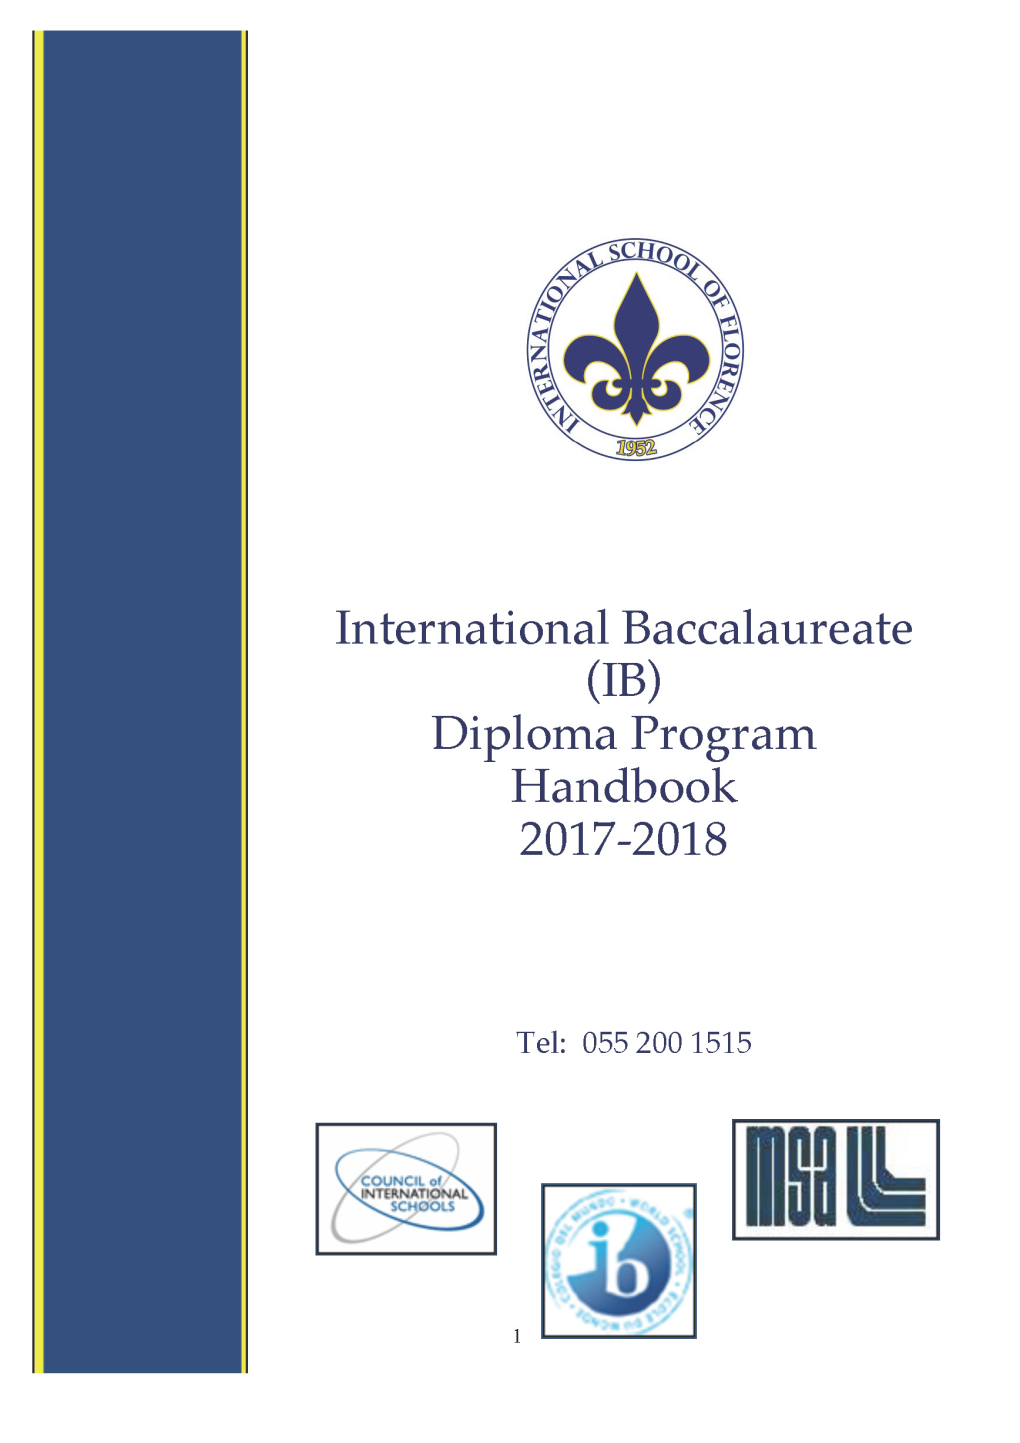 IB Handbook 2017-18